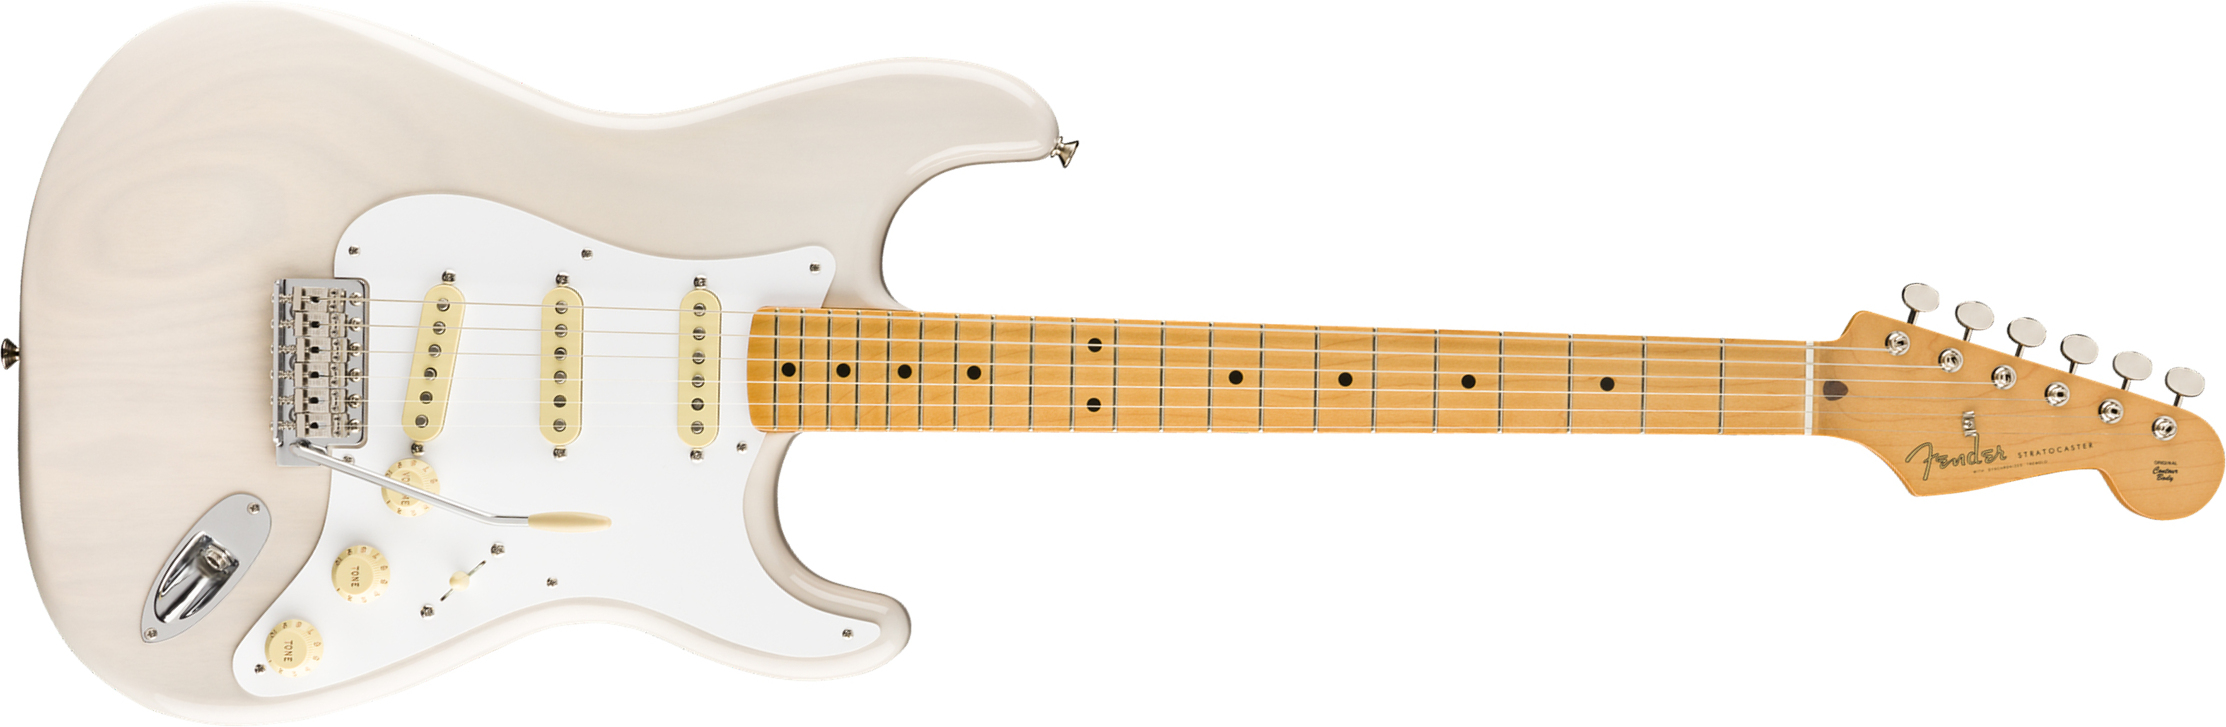 Fender Strat 50s Vintera Vintage Mex Mn - White Blonde - Str shape electric guitar - Main picture